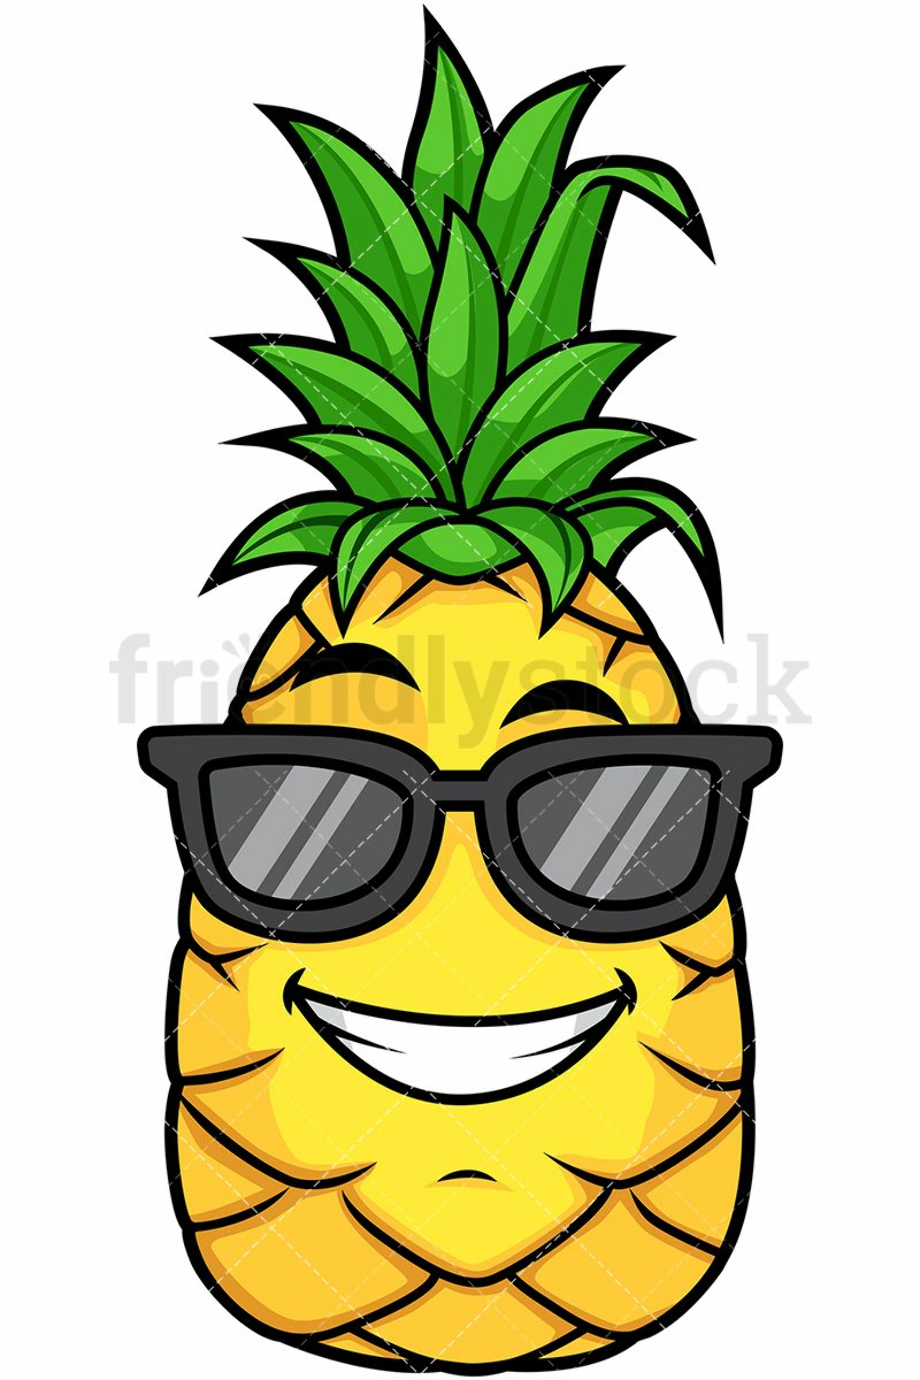 pineapple clip art royalty free